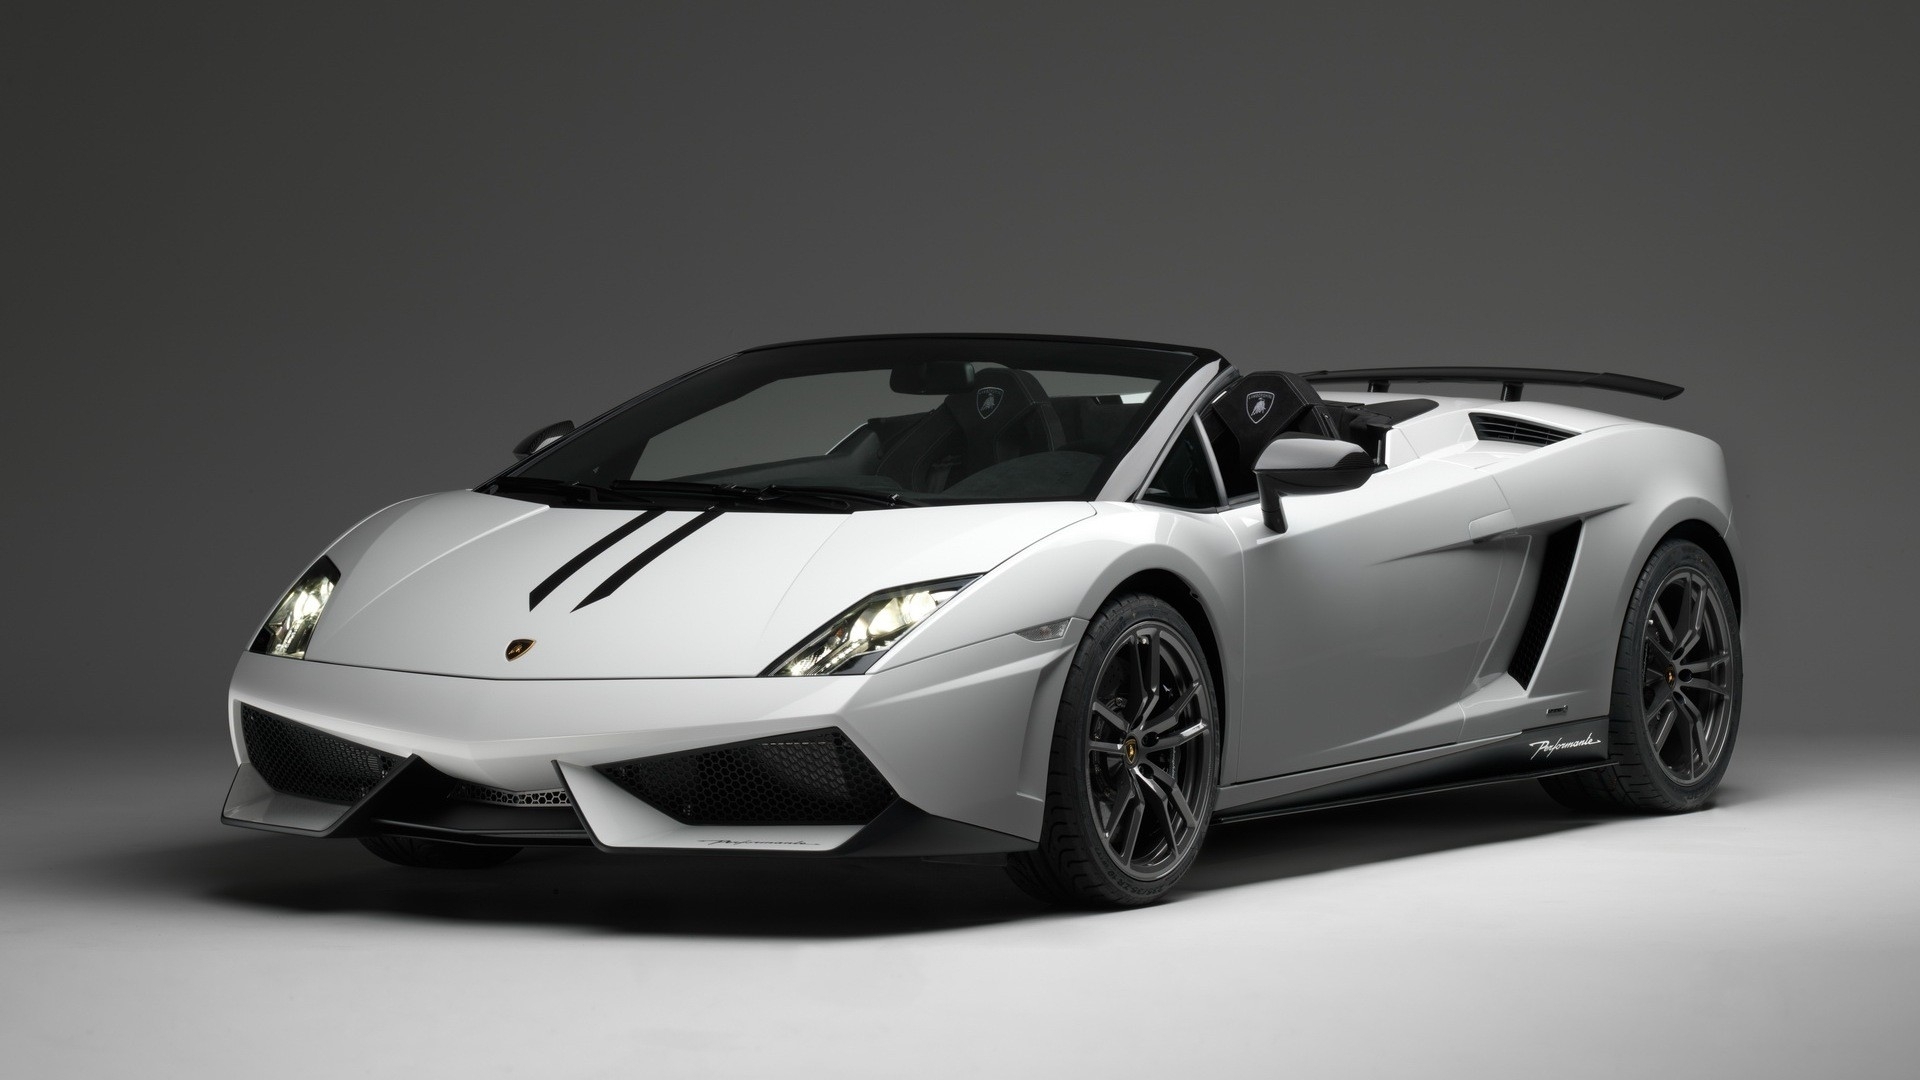 Black and White Wallpapers: Lamborghini Gallardo Black 